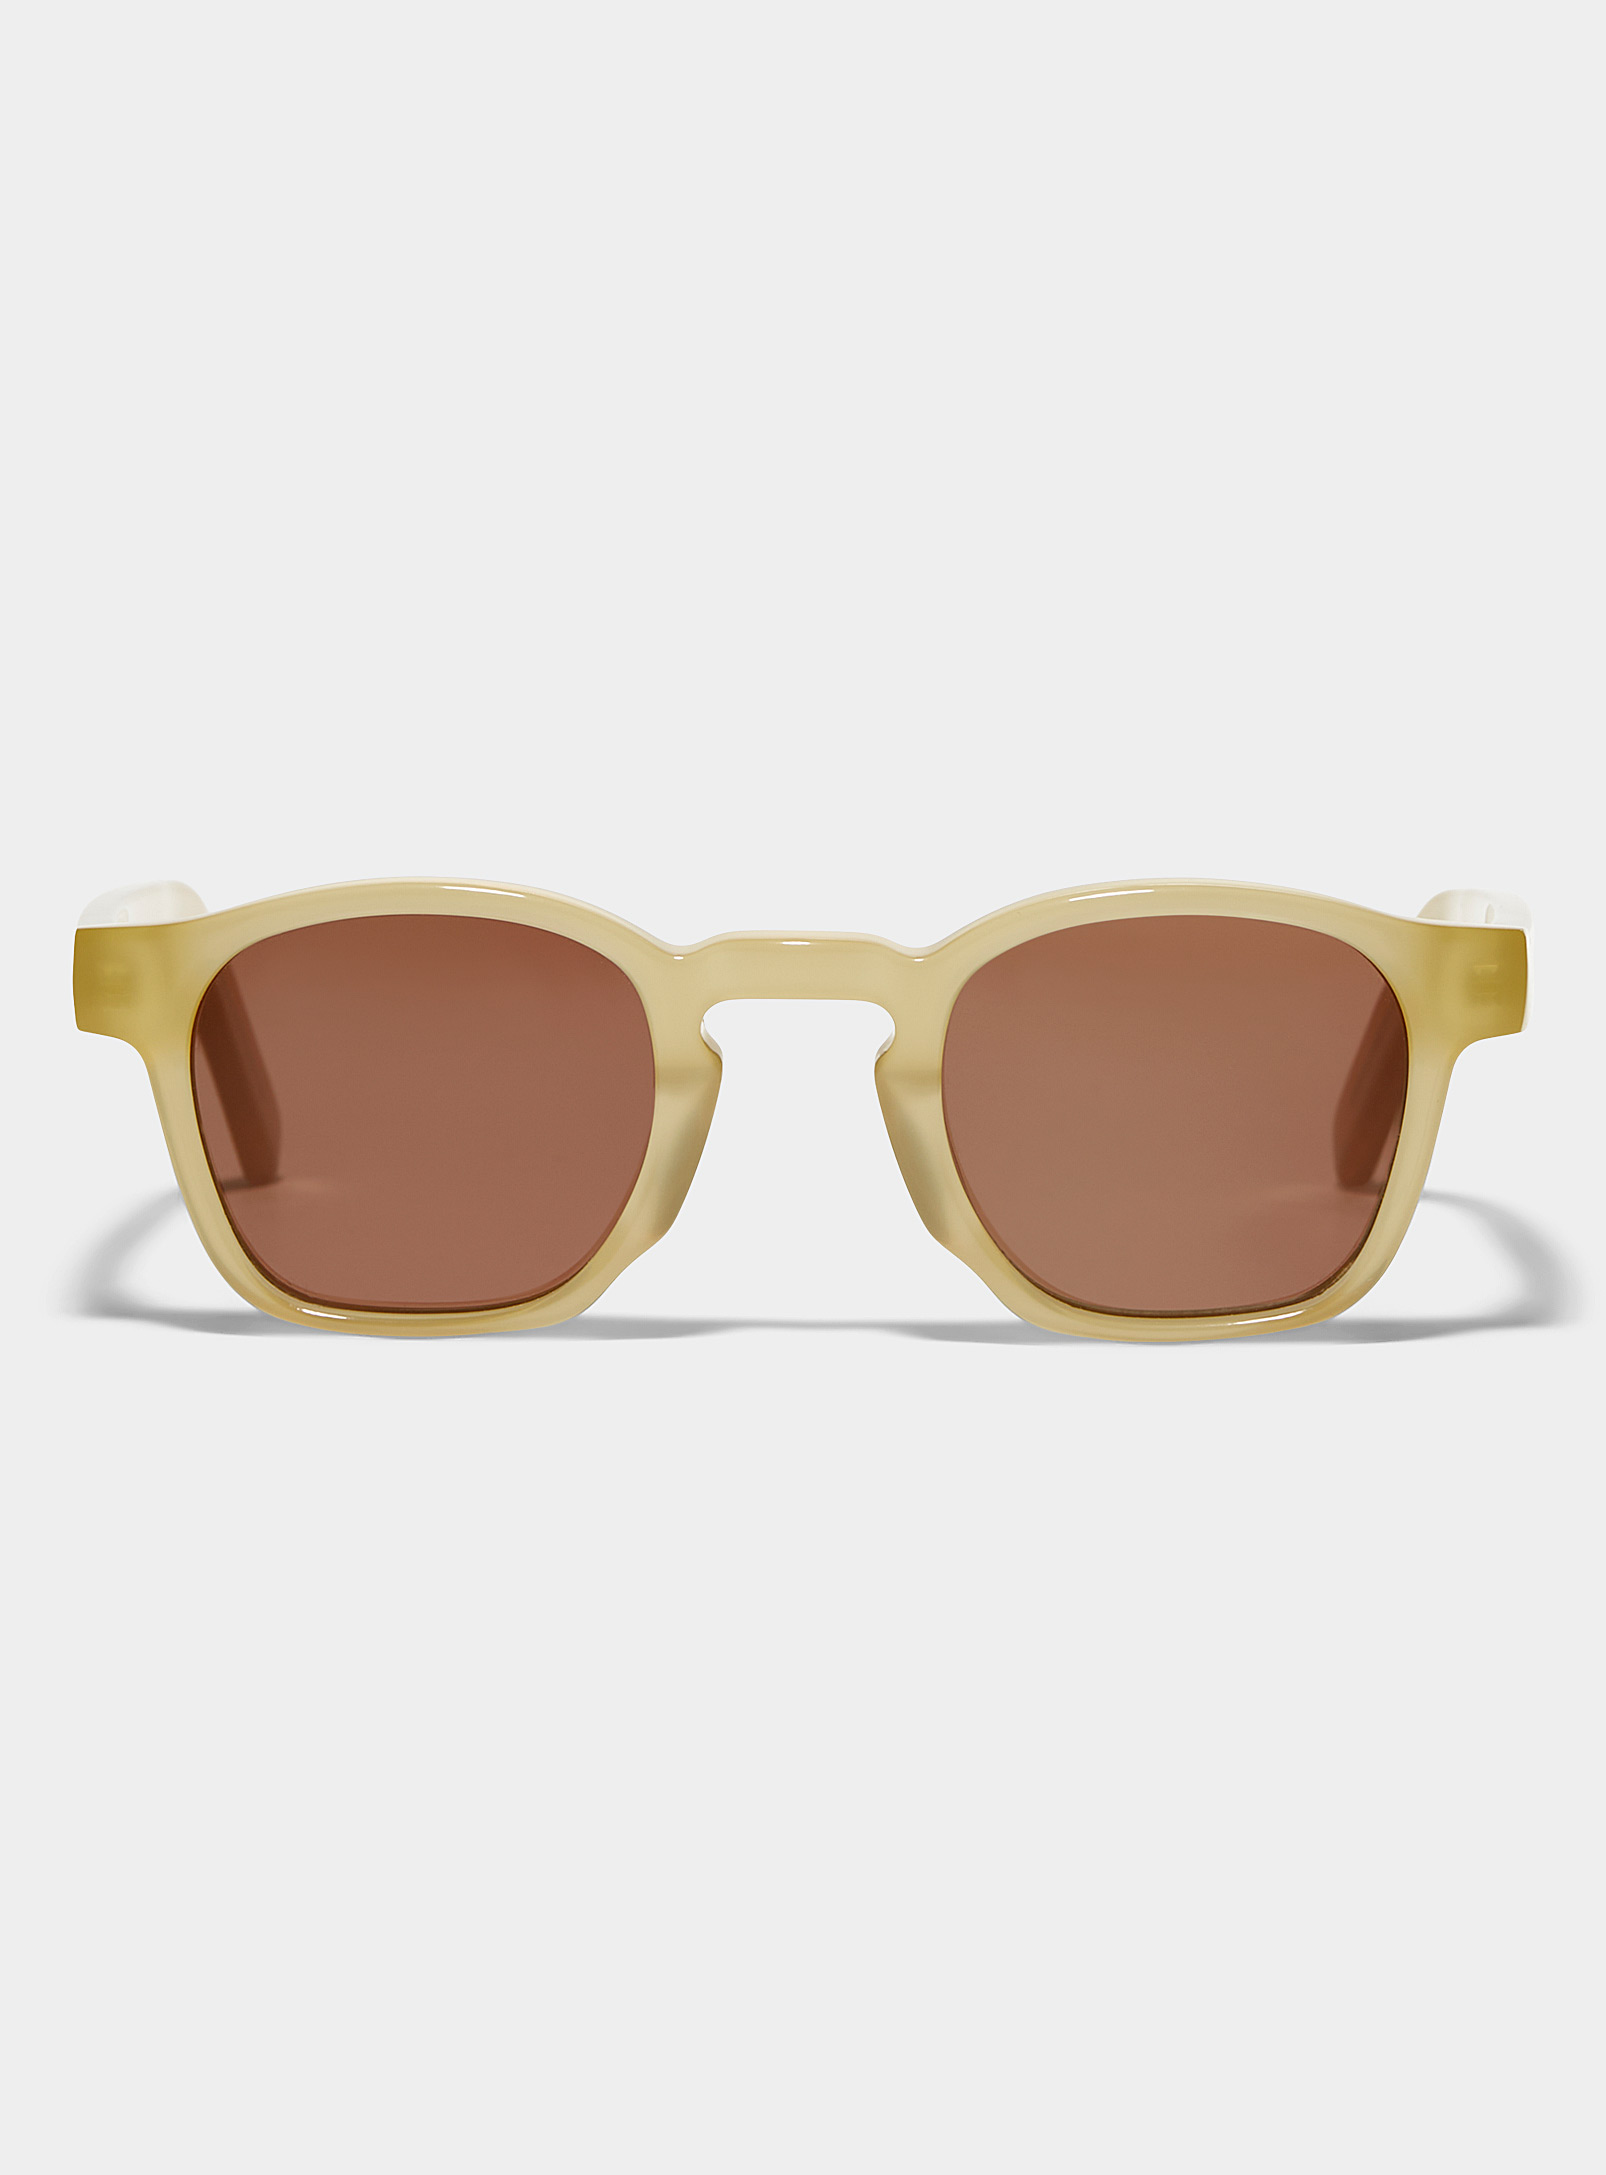 French Kiwis Enzo Round Sunglasses In Honey